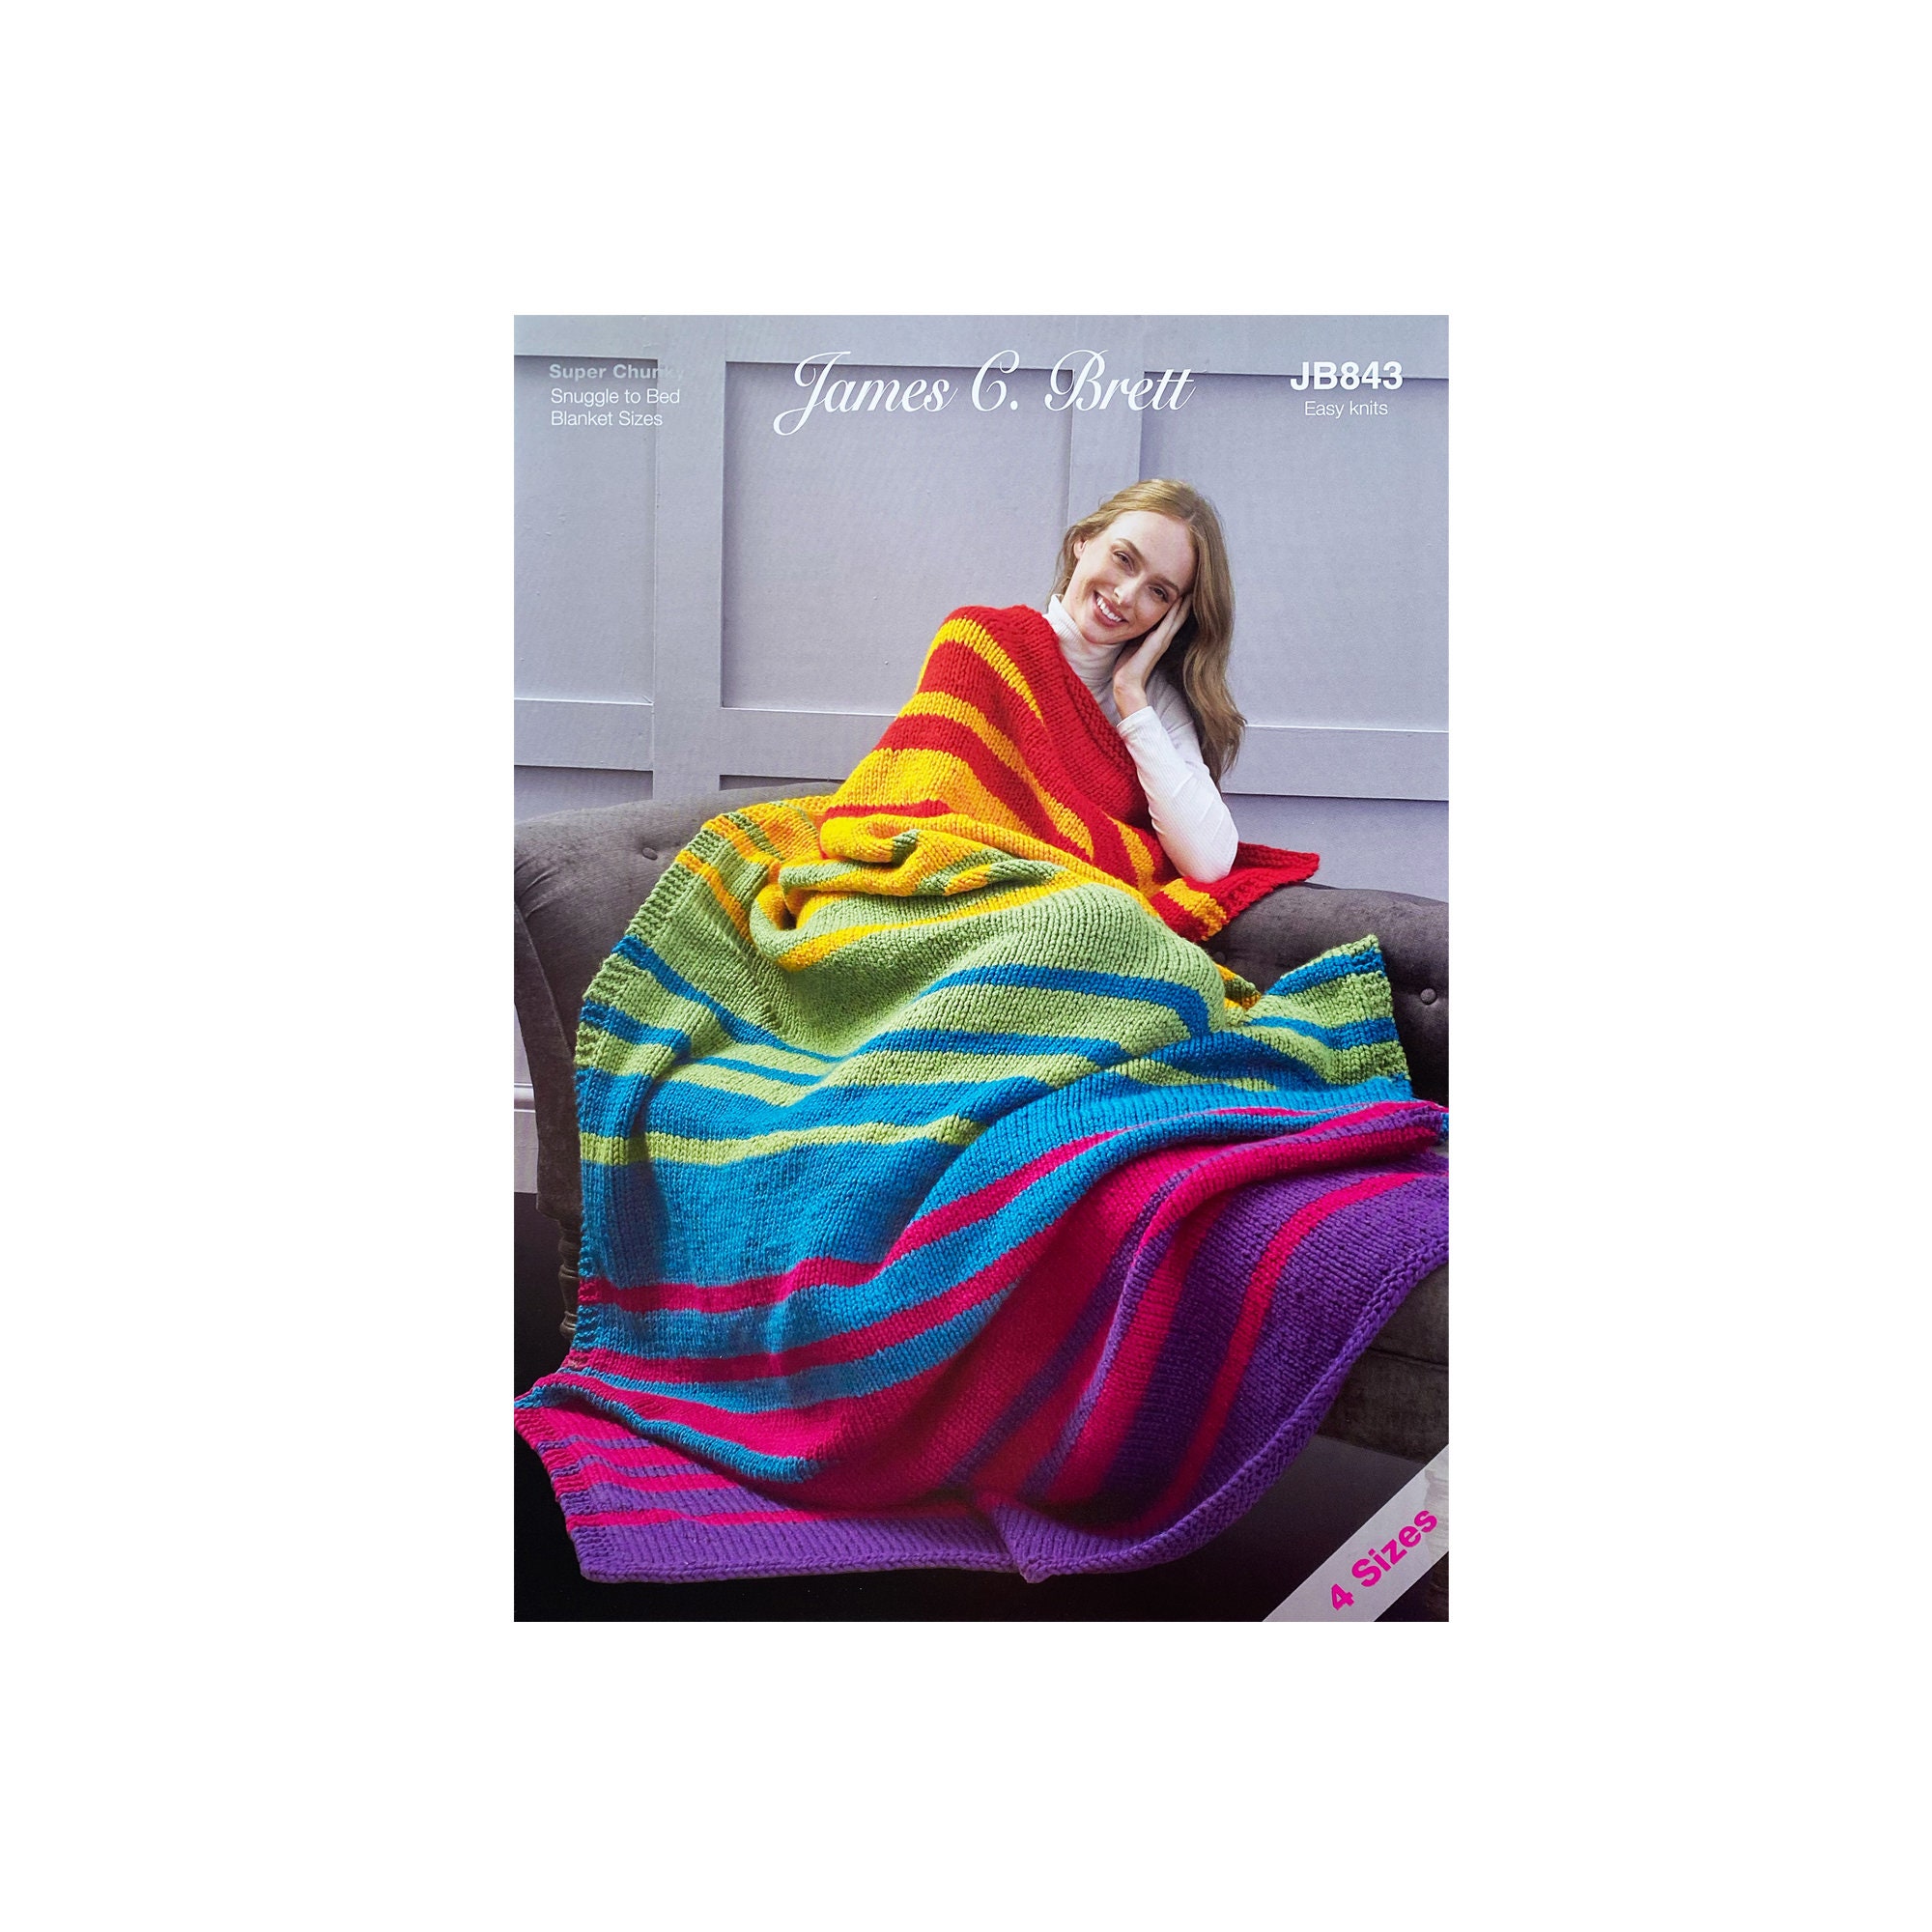 Chunky Knit Blanket, Blanket, Super Chunky Blanket, Giant Knit Blanket, Thick  Yarn Blanket, Bulky Knit, Merino Wool, Extreme Knitting 